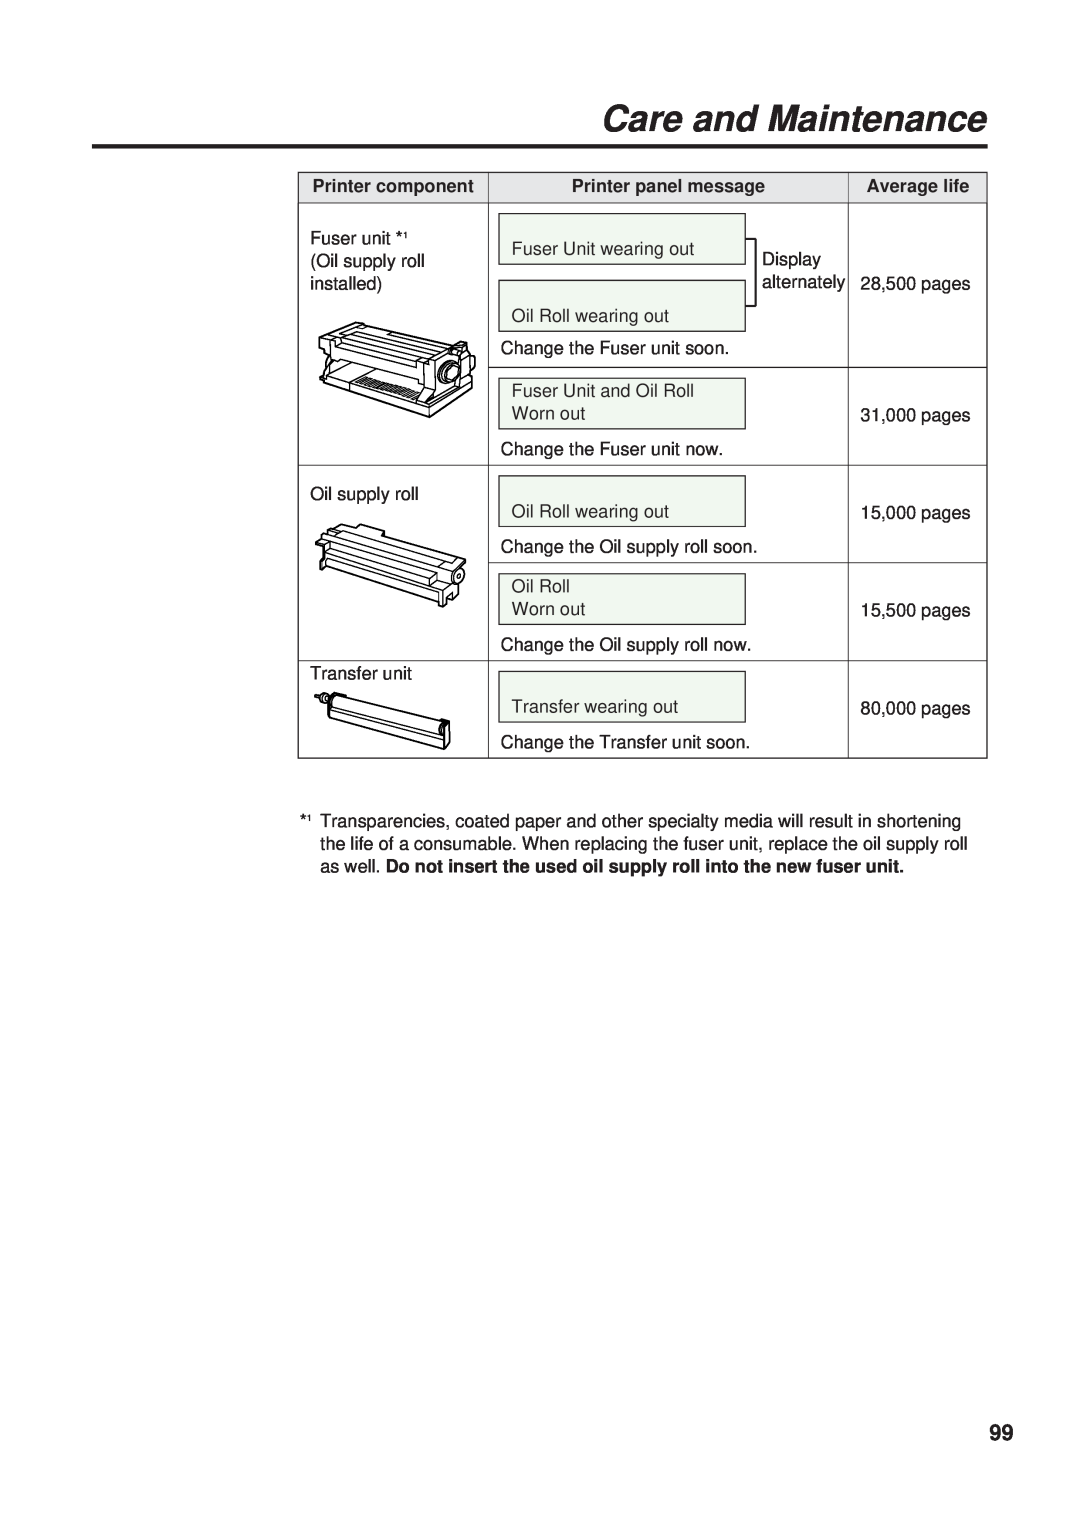 Panasonic KX-PS8000 manual Care and Maintenance, Printer component, Printer panel message 